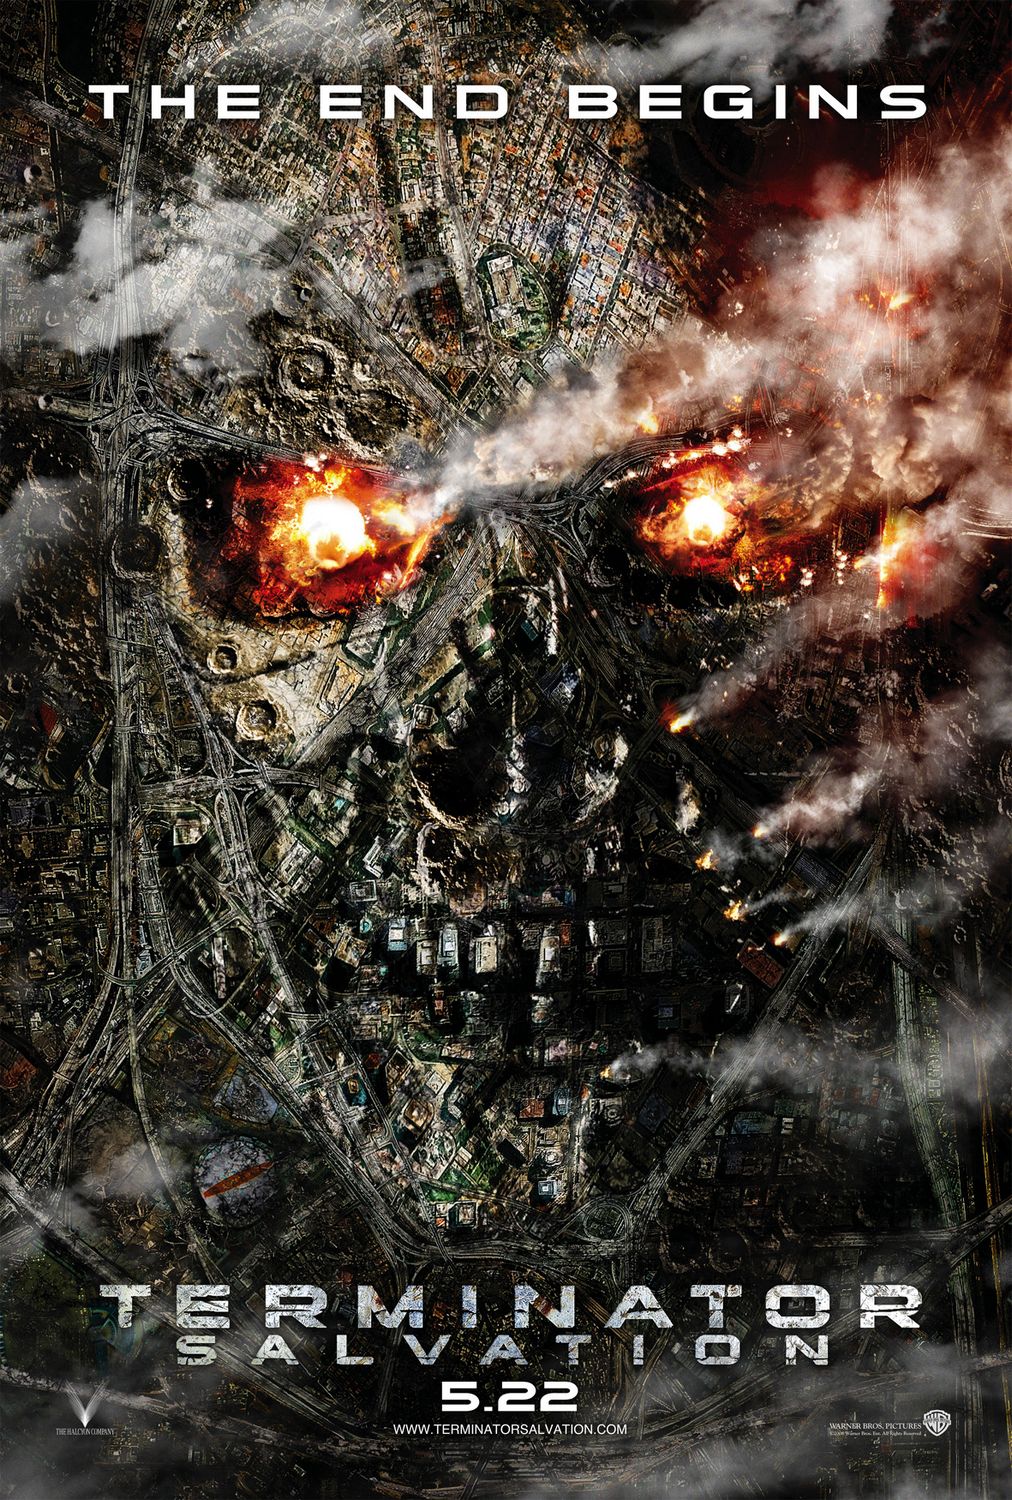 Terminator Salvation Backgrounds, Compatible - PC, Mobile, Gadgets| 1012x1500 px